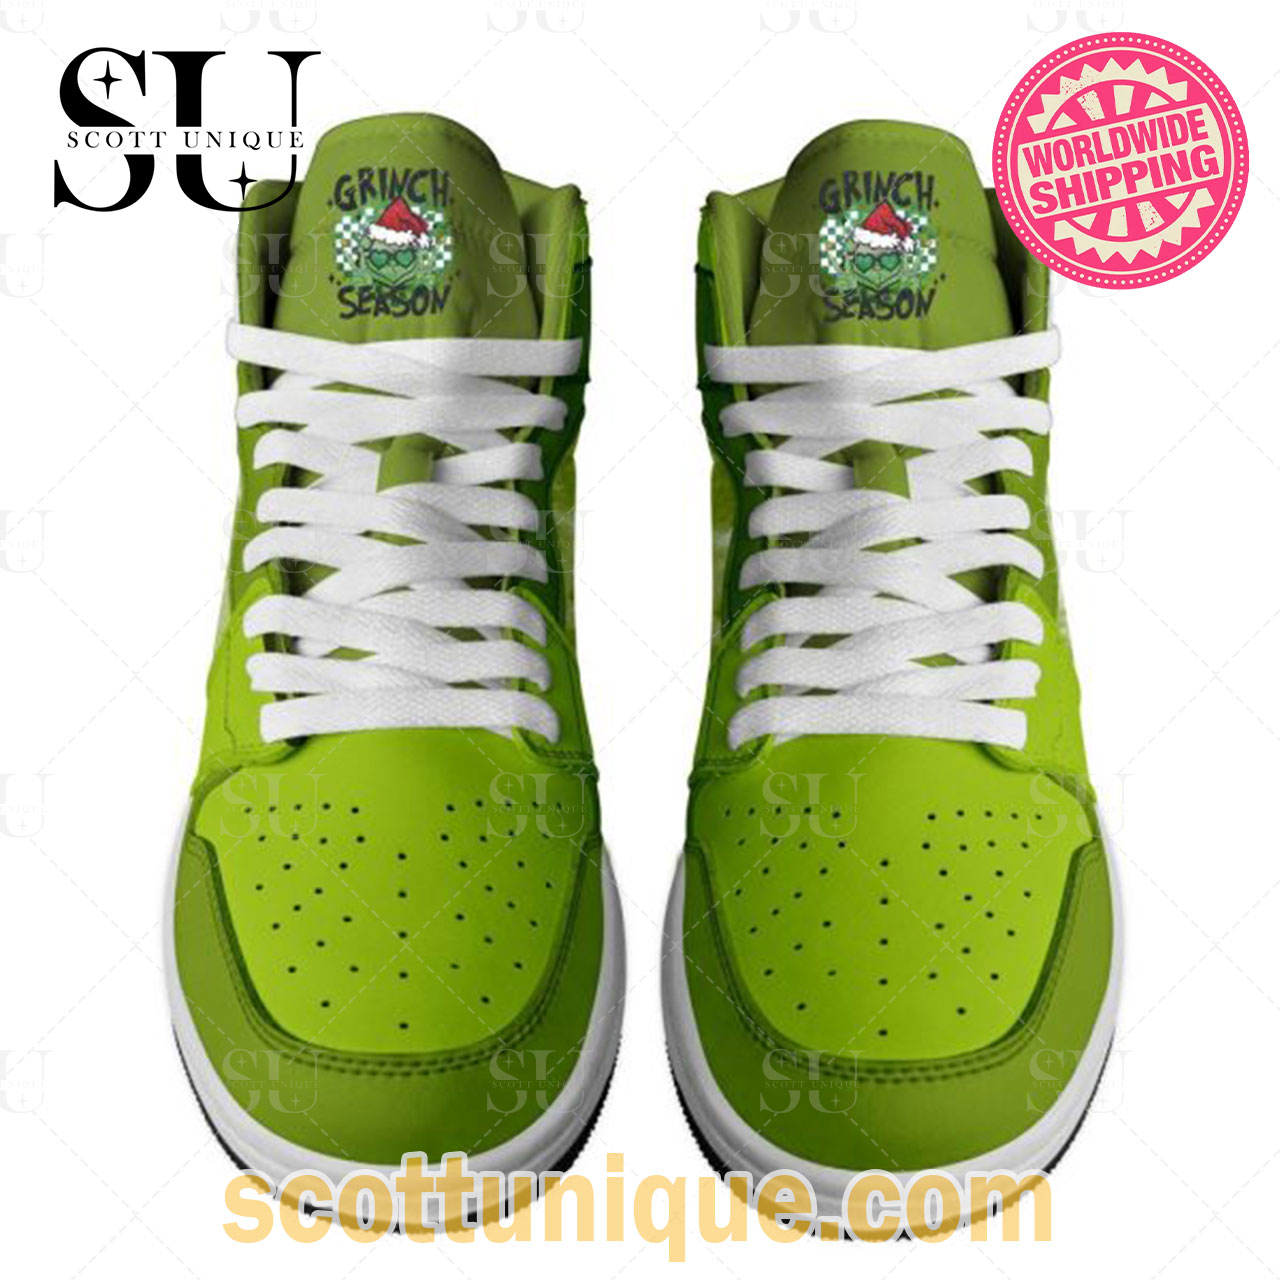 The Grinch Air Jordan 1 High Shoes Sneaker